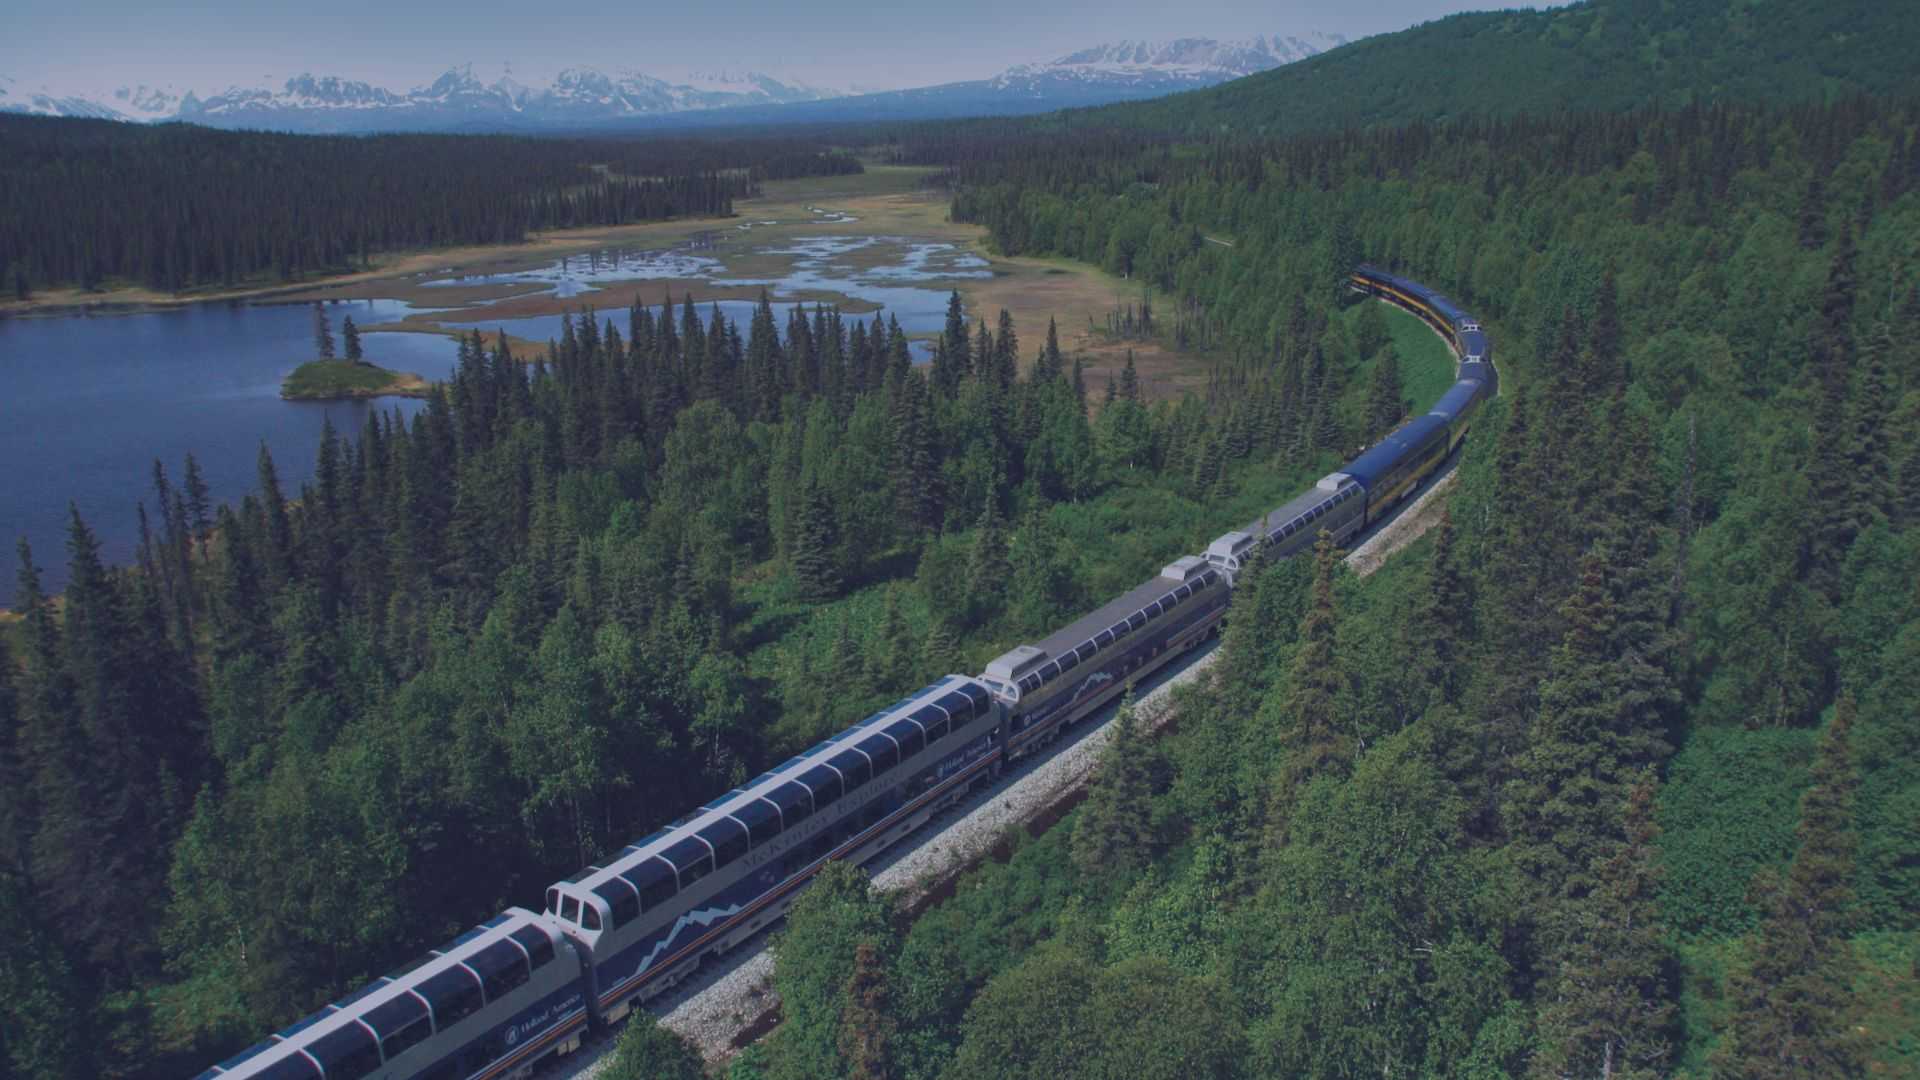 McKinley Explorer train on Alaska cruisetour